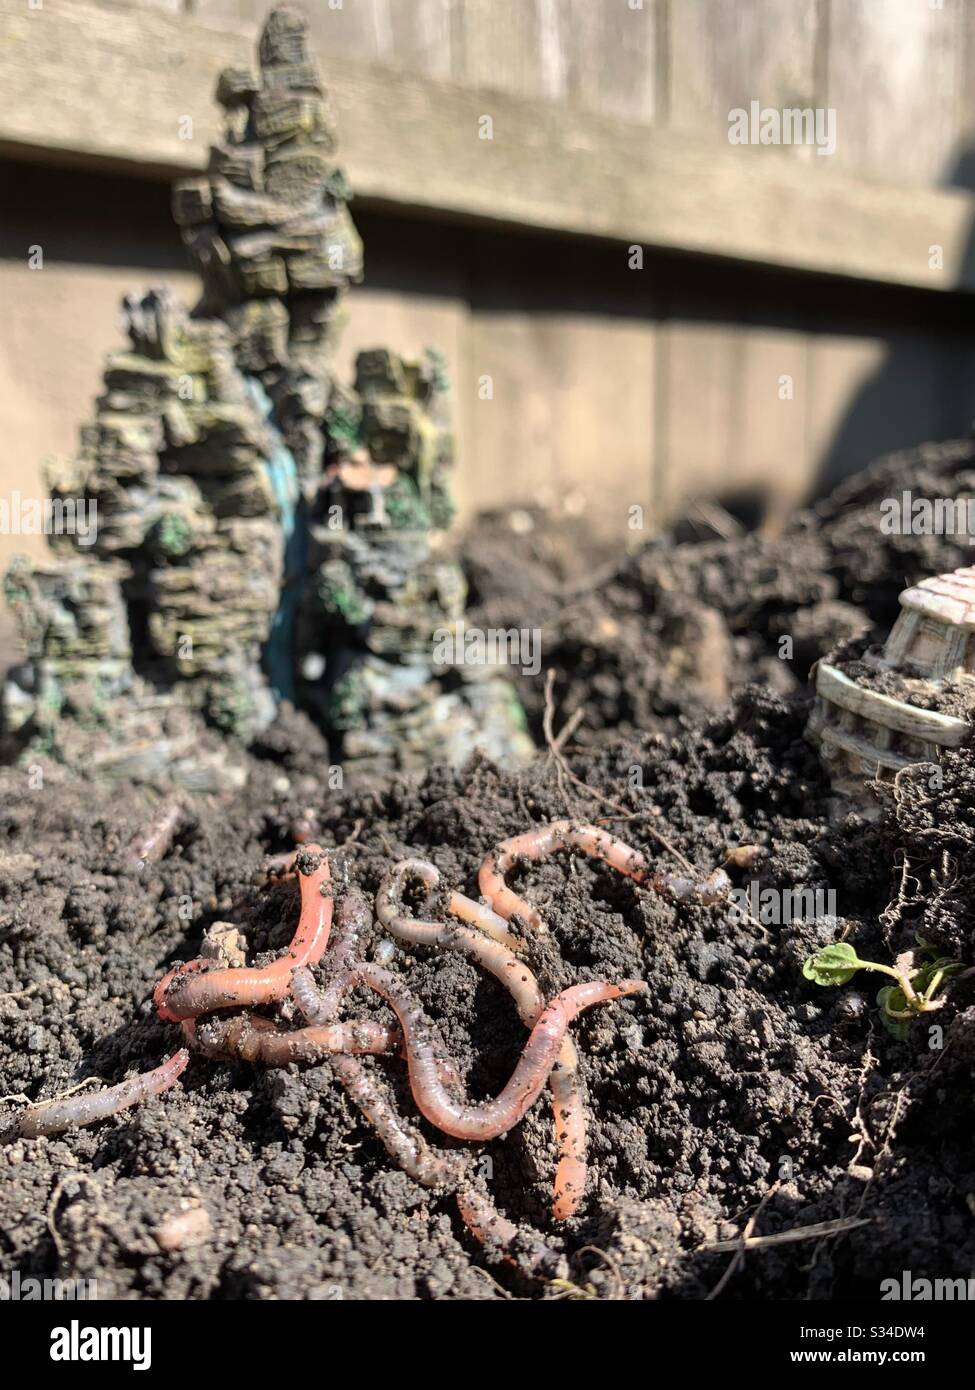 Very decorative earthworm garden Stock Photo